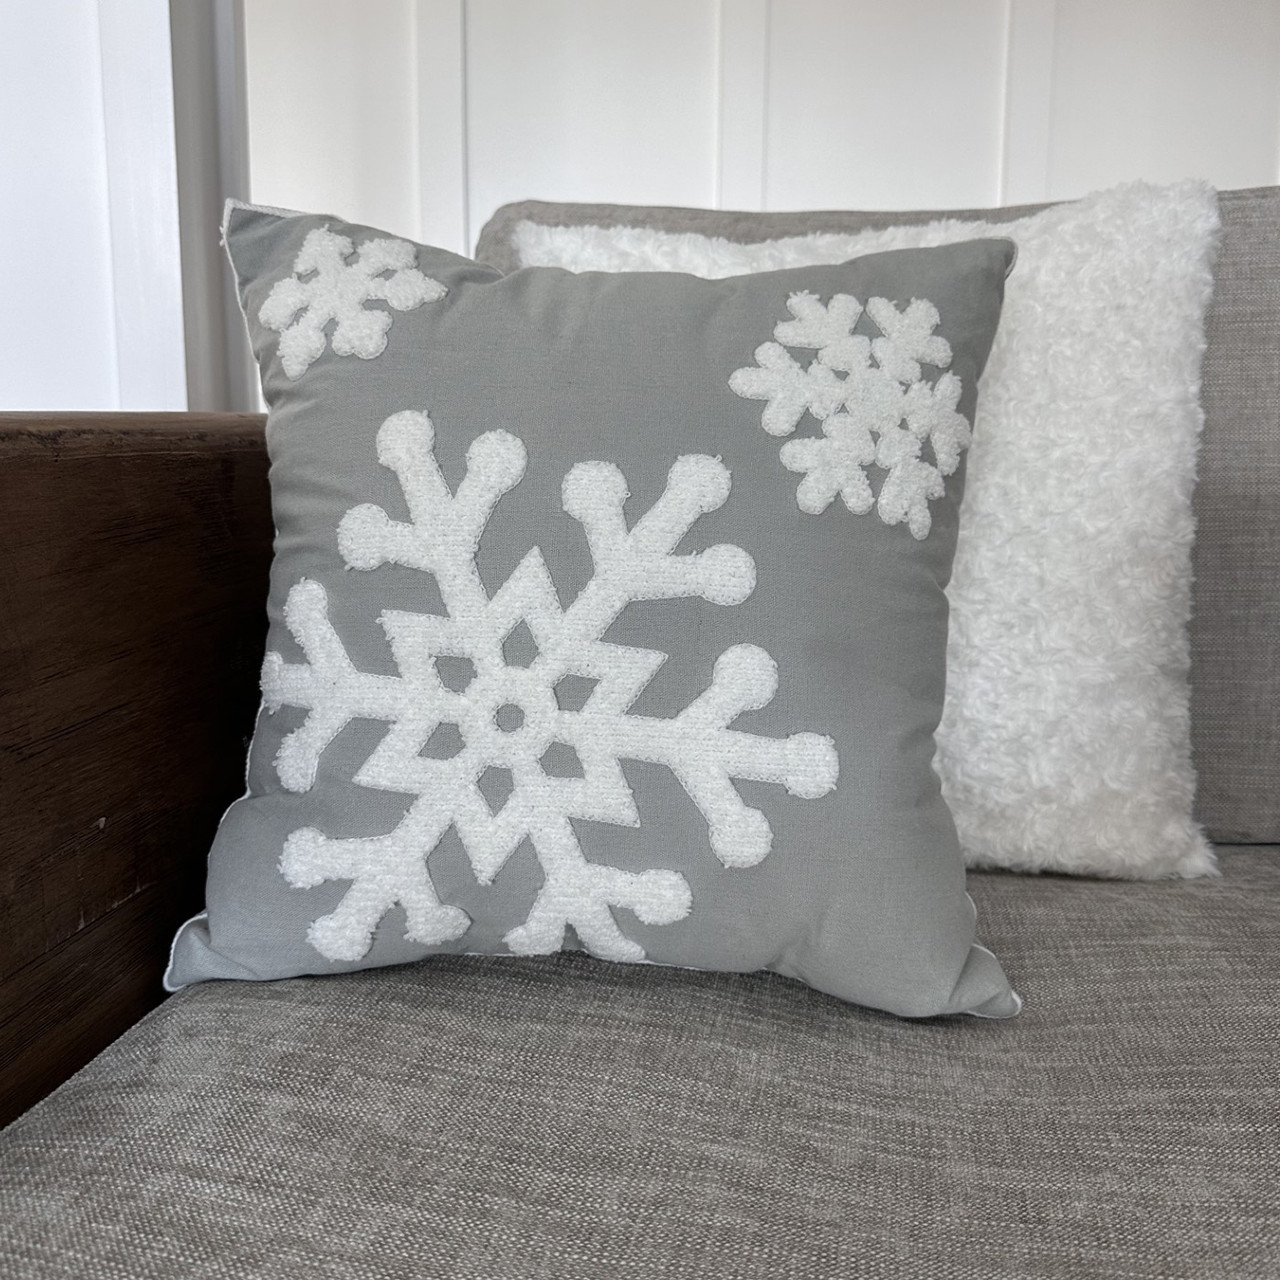 Winter Wonder Lane Red & White Embroidered Snowflake Throw Pillow